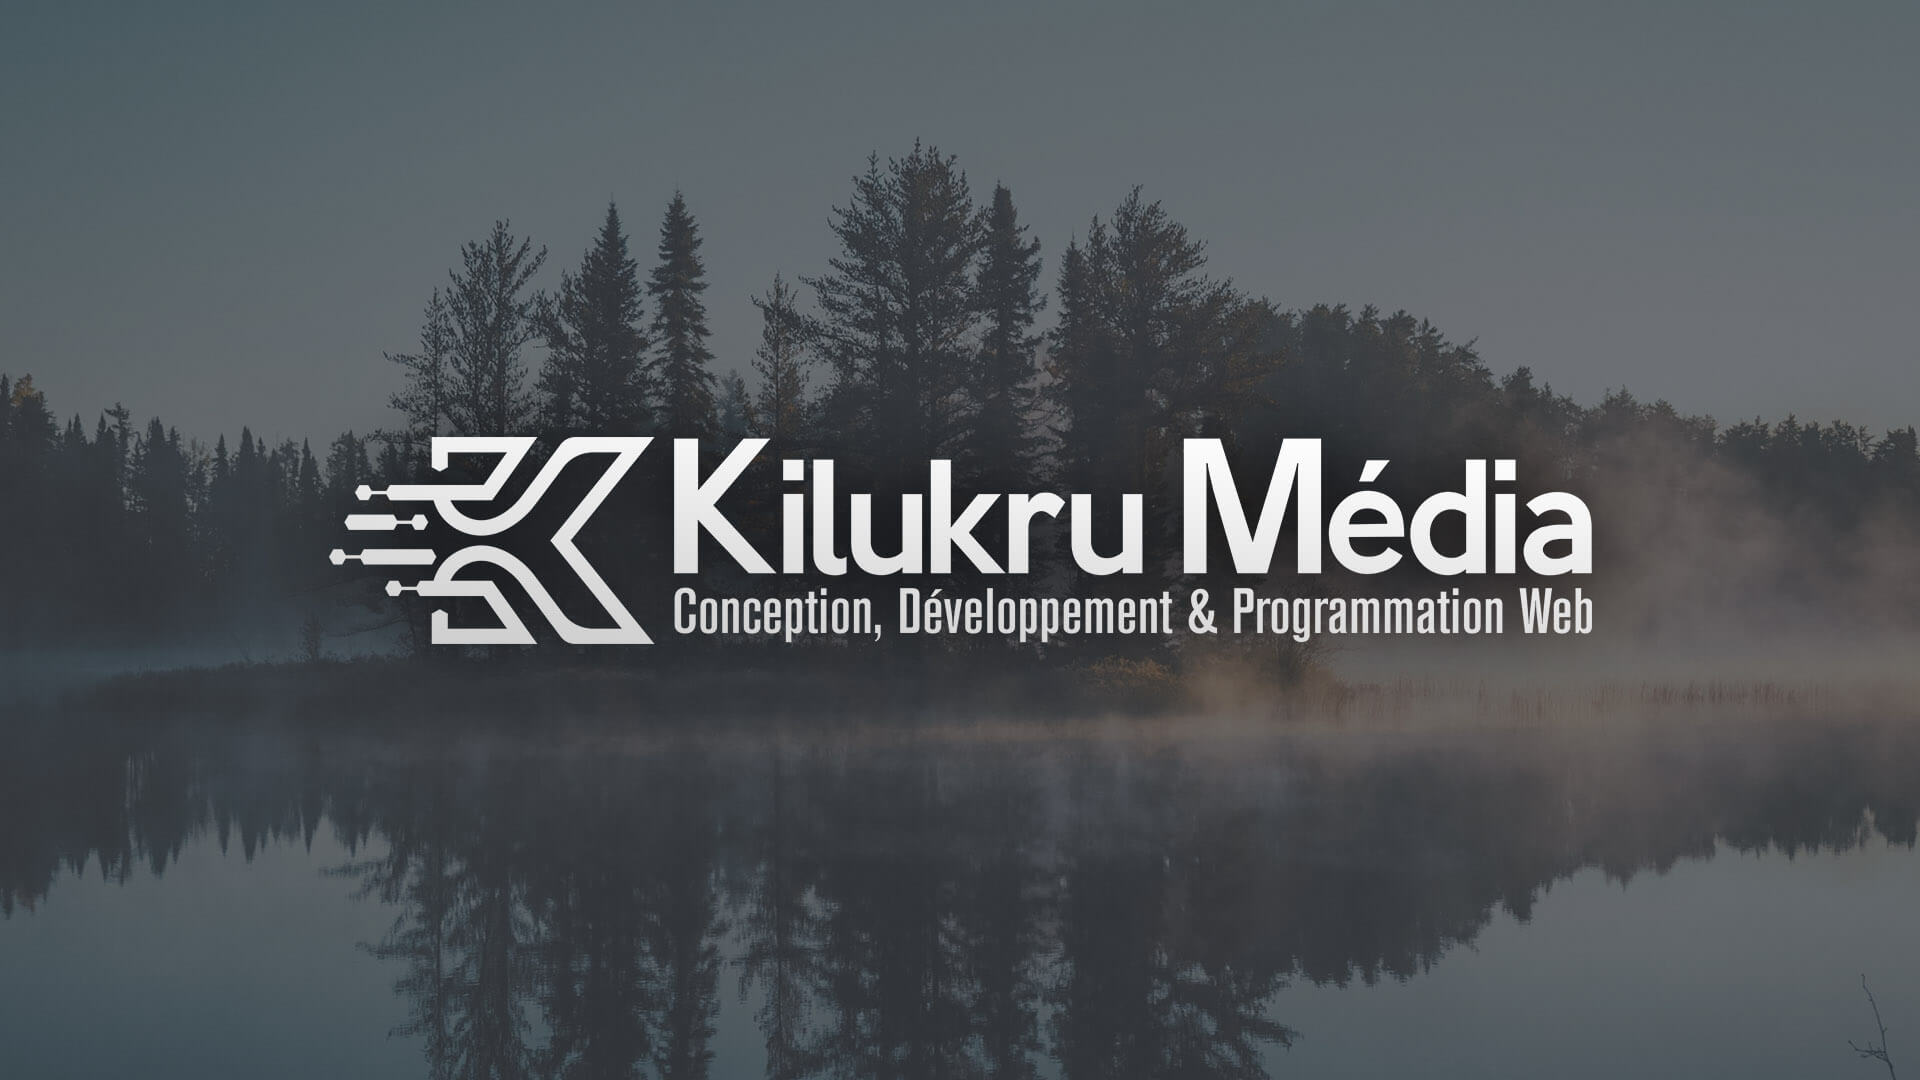 (c) Kilukrumedia.com